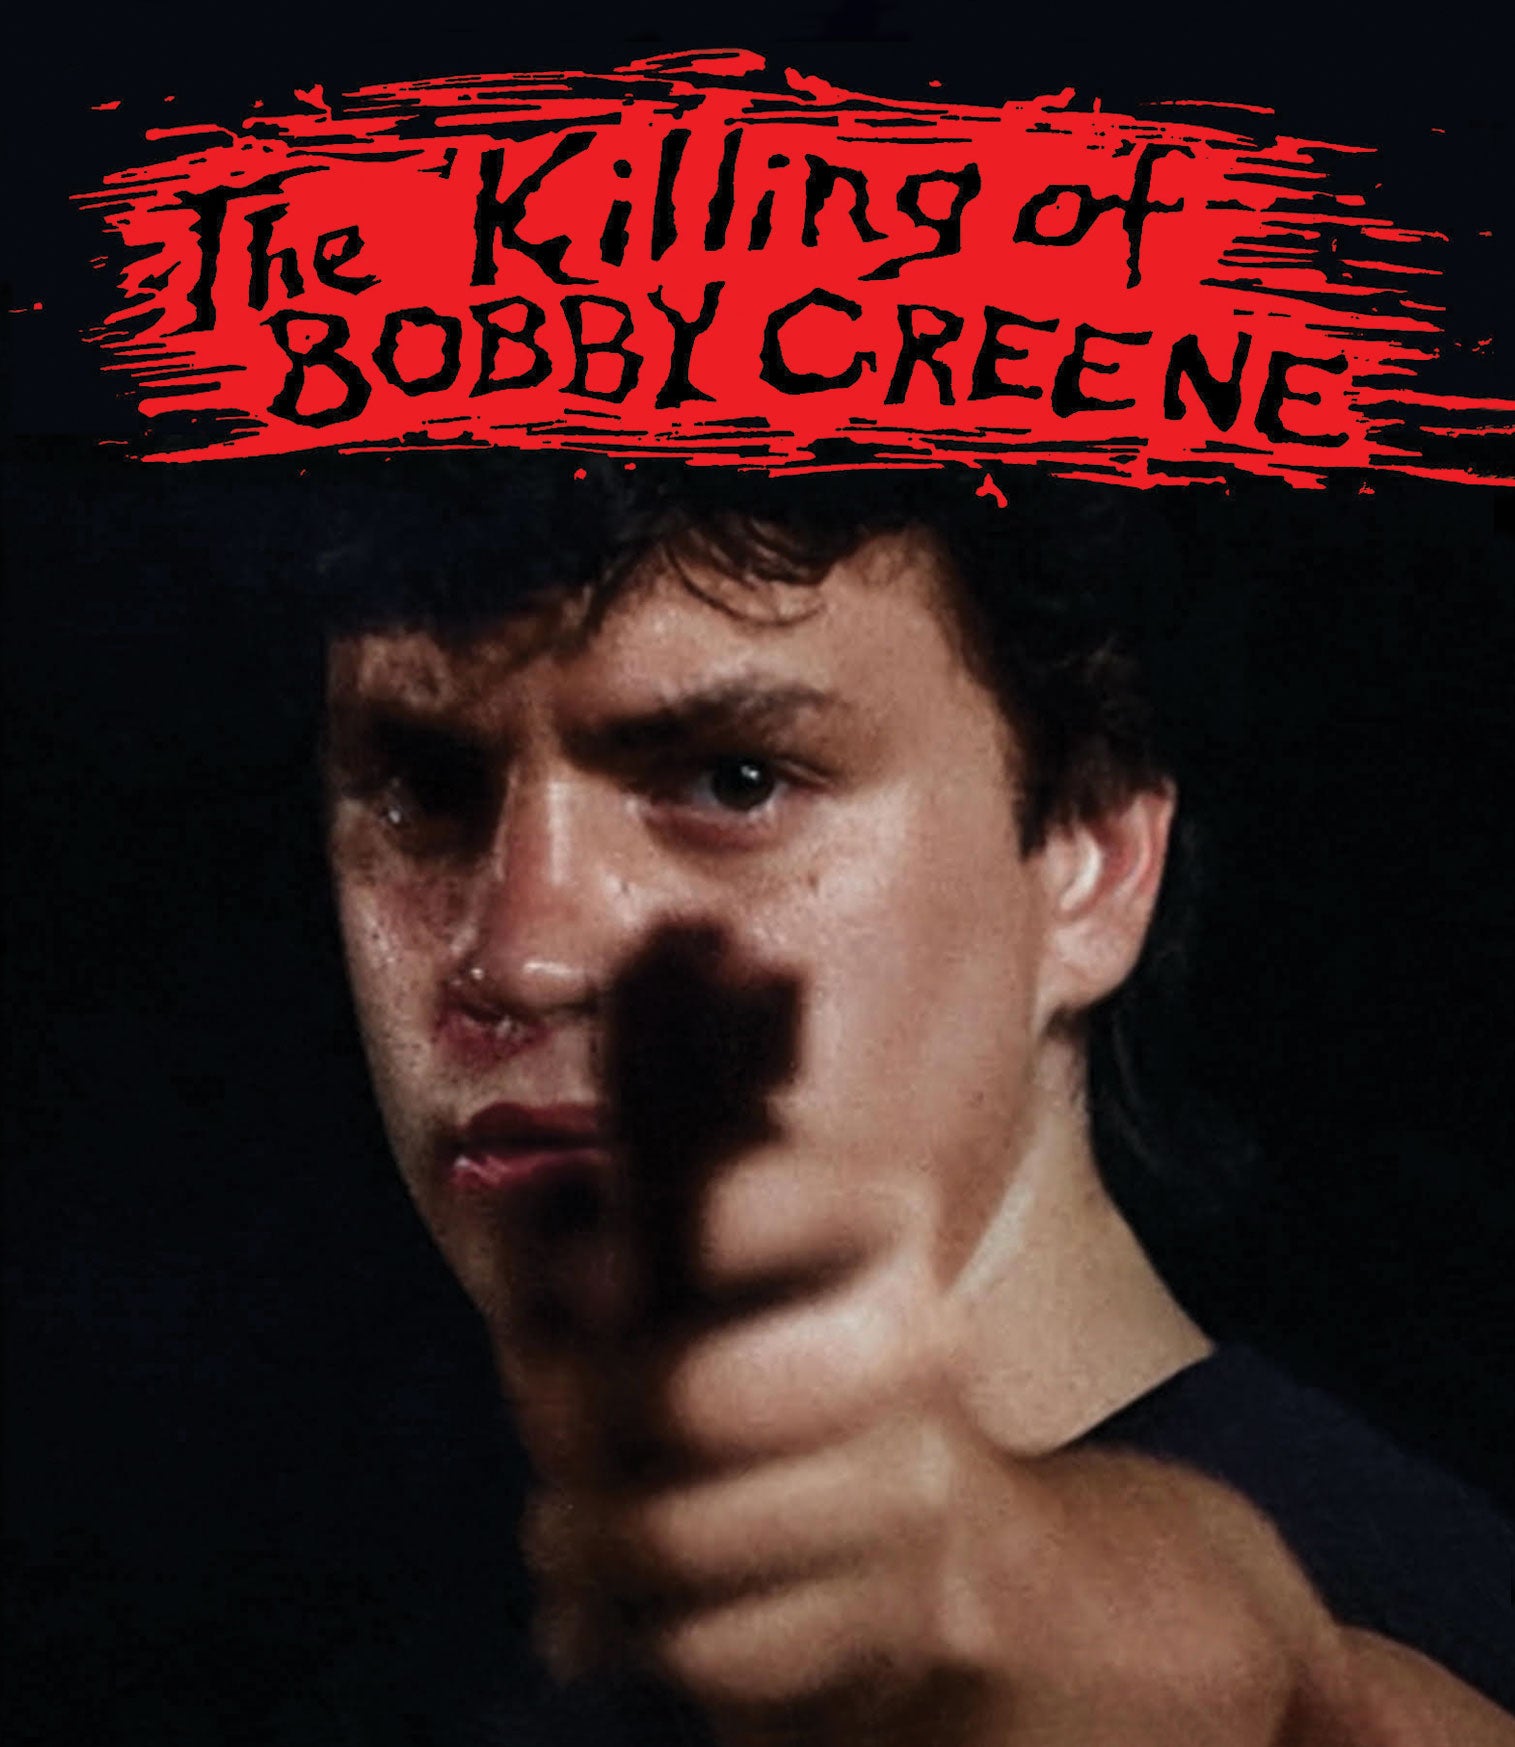 THE KILLING OF BOBBY GREENE BLU-RAY